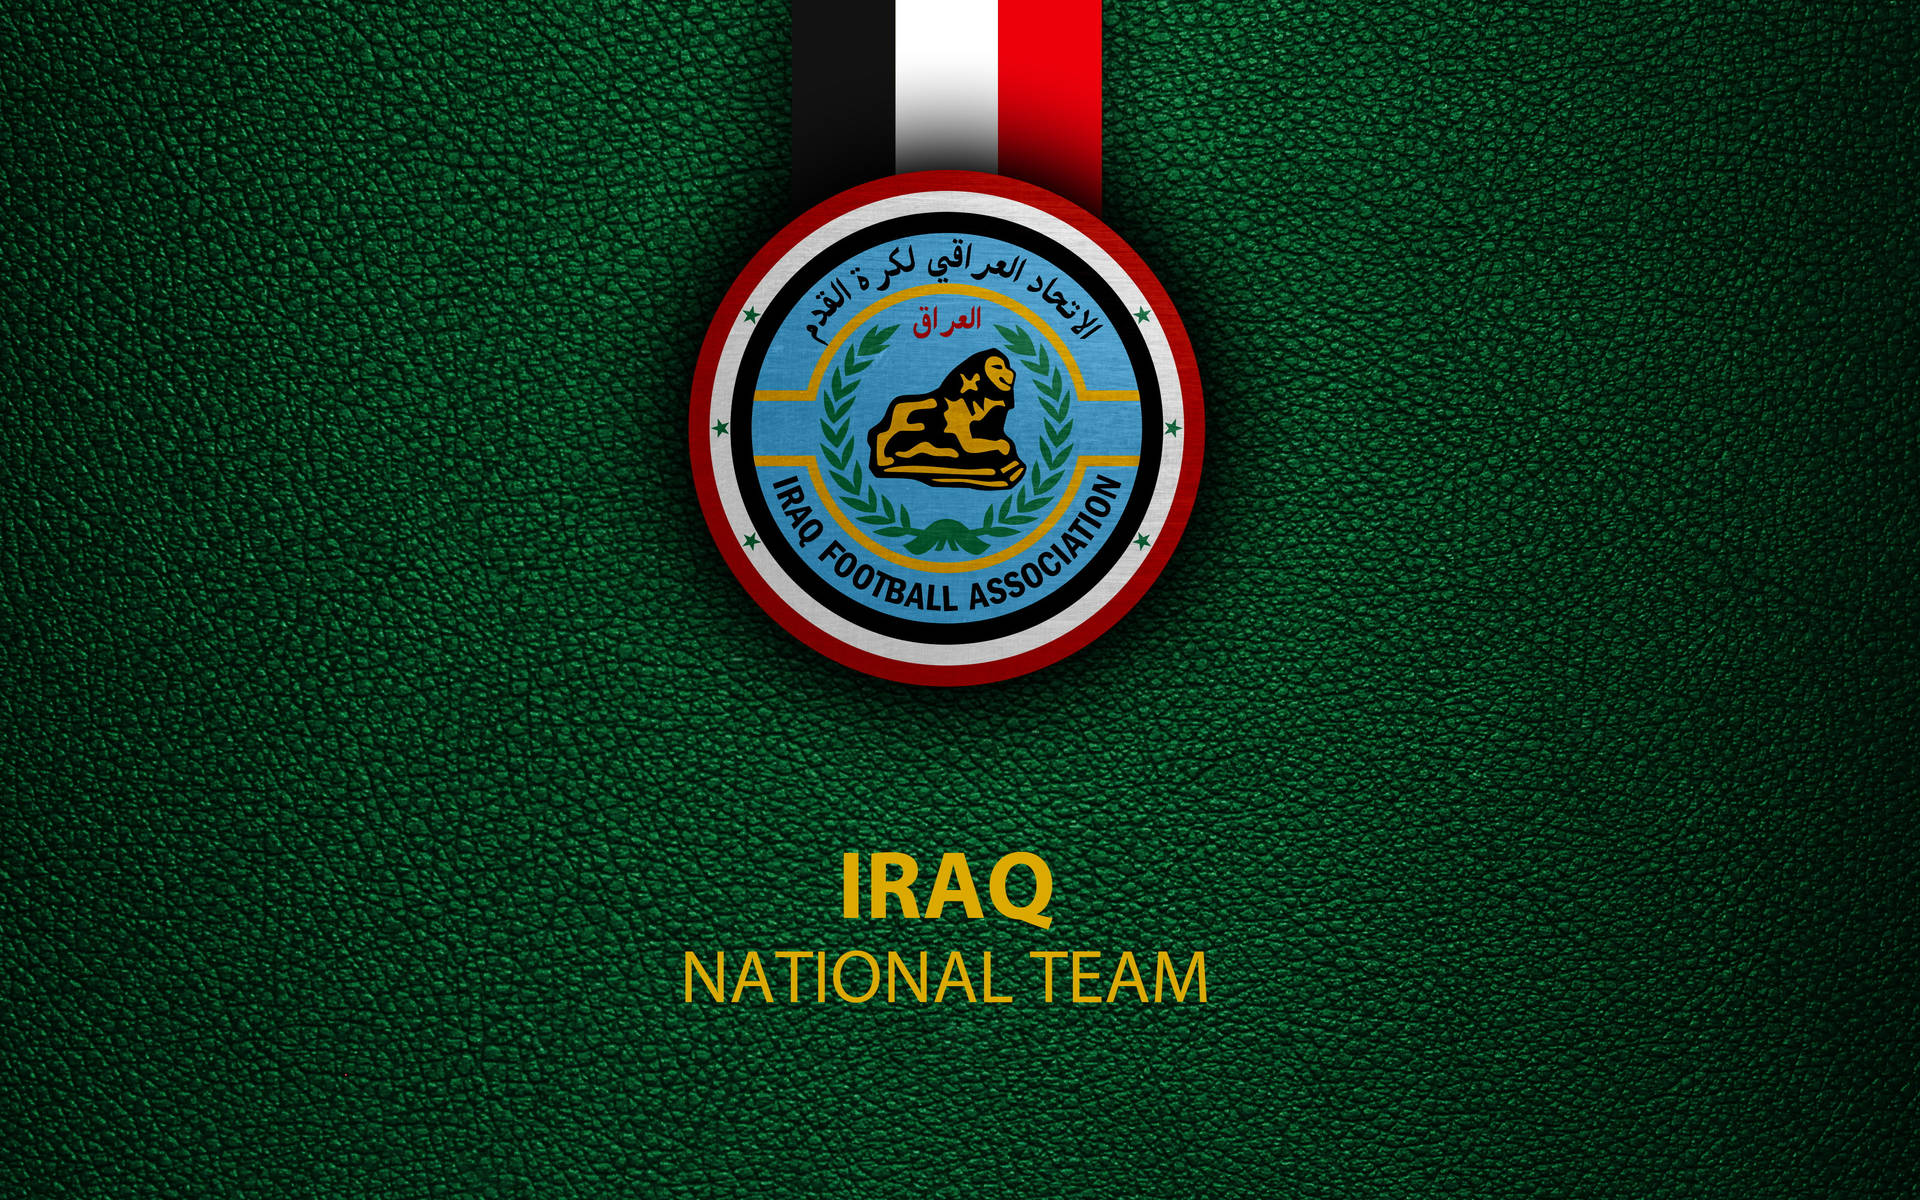 Iraq Football Association Dark Green Background